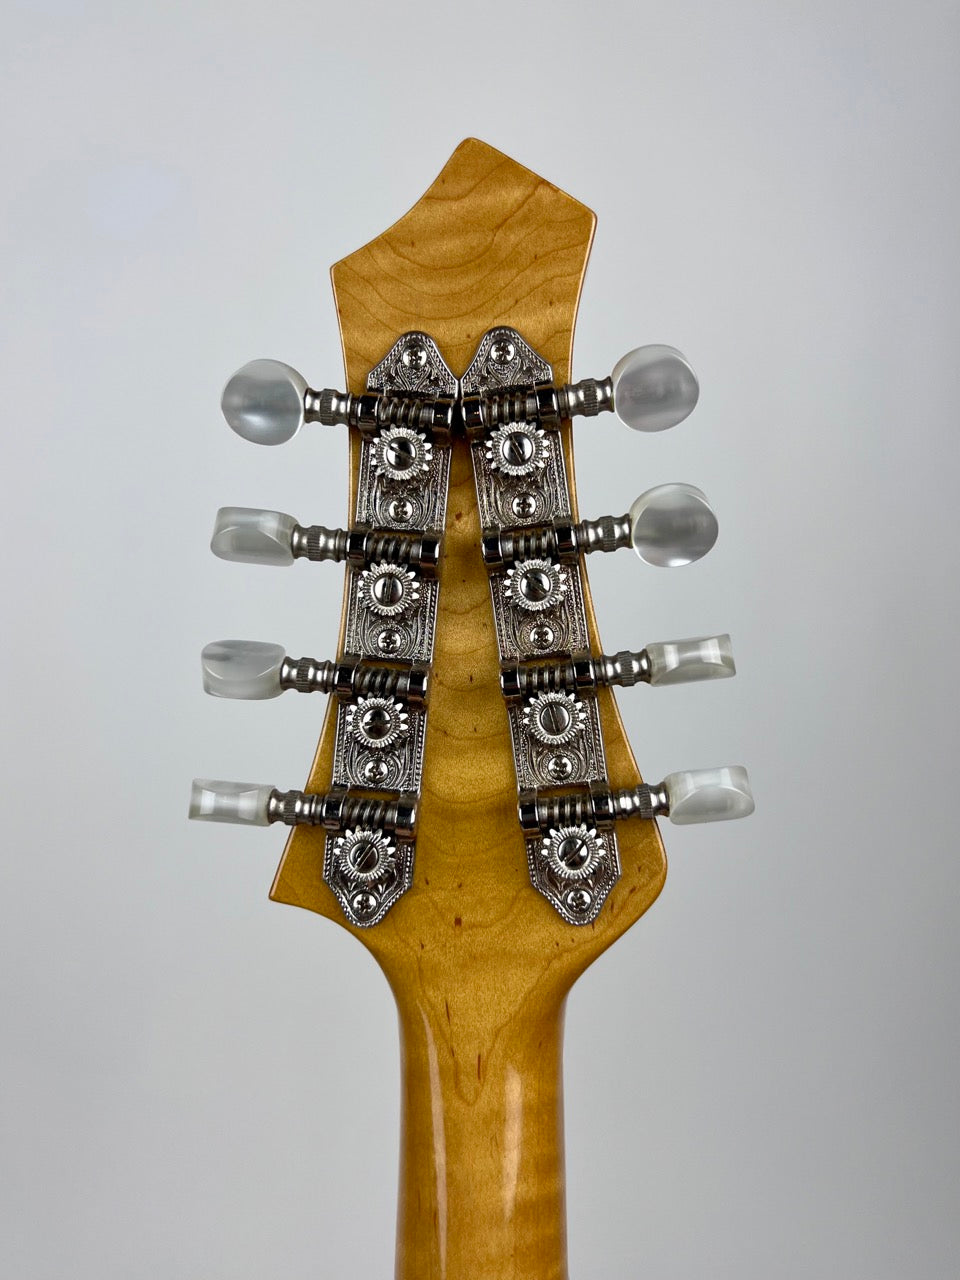 1998 Rigel G-110 Custom Mandolin